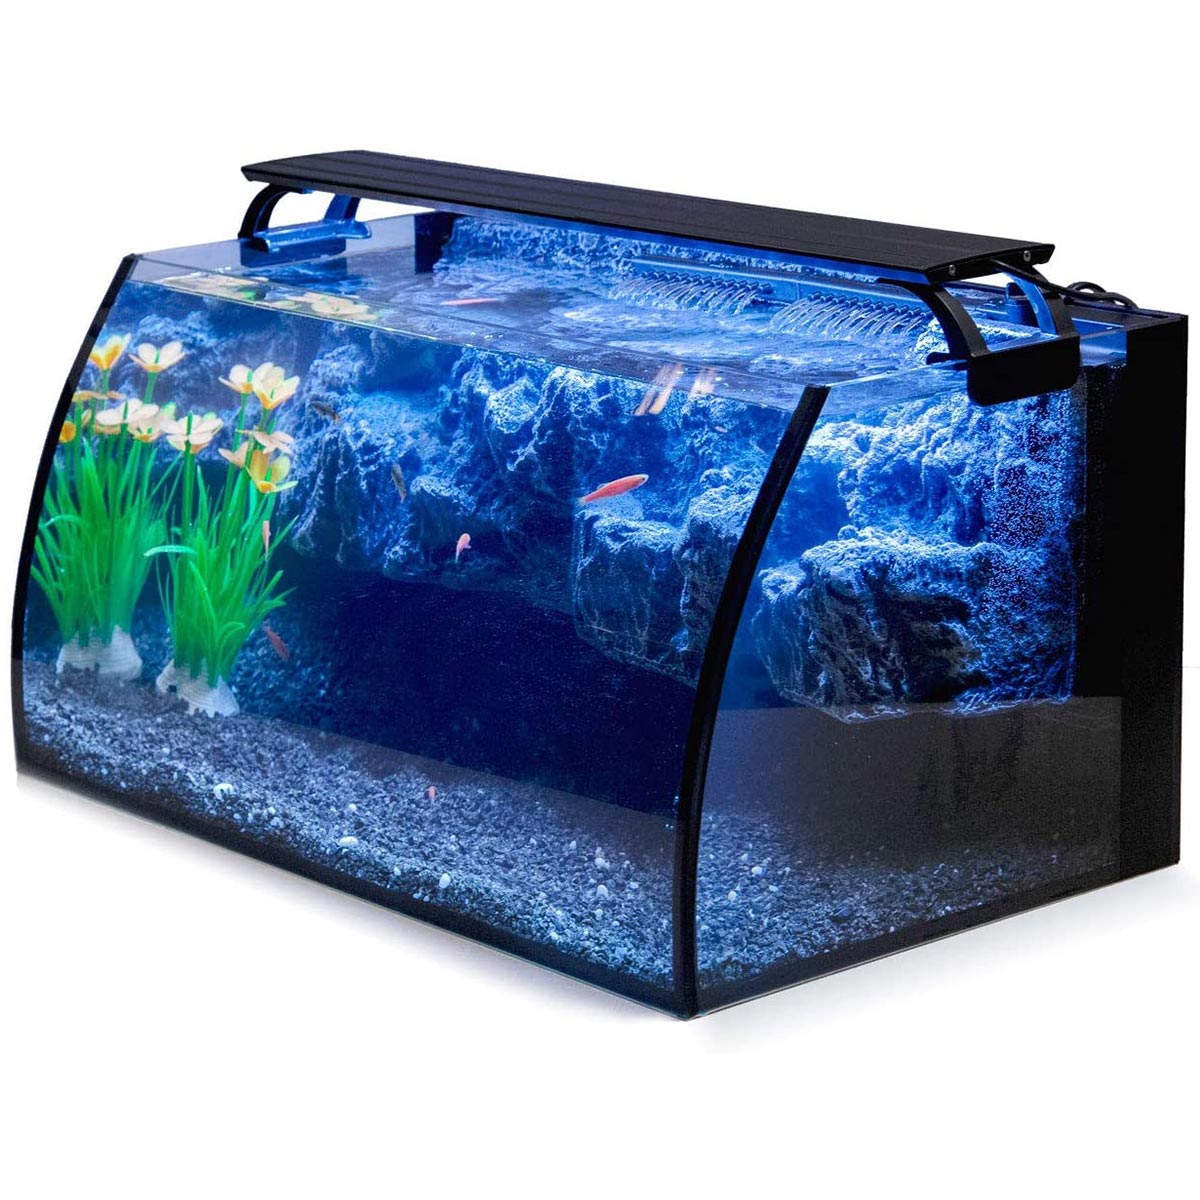 BettaTank 1-Gallon Deco Fish Tank with LED Lighting